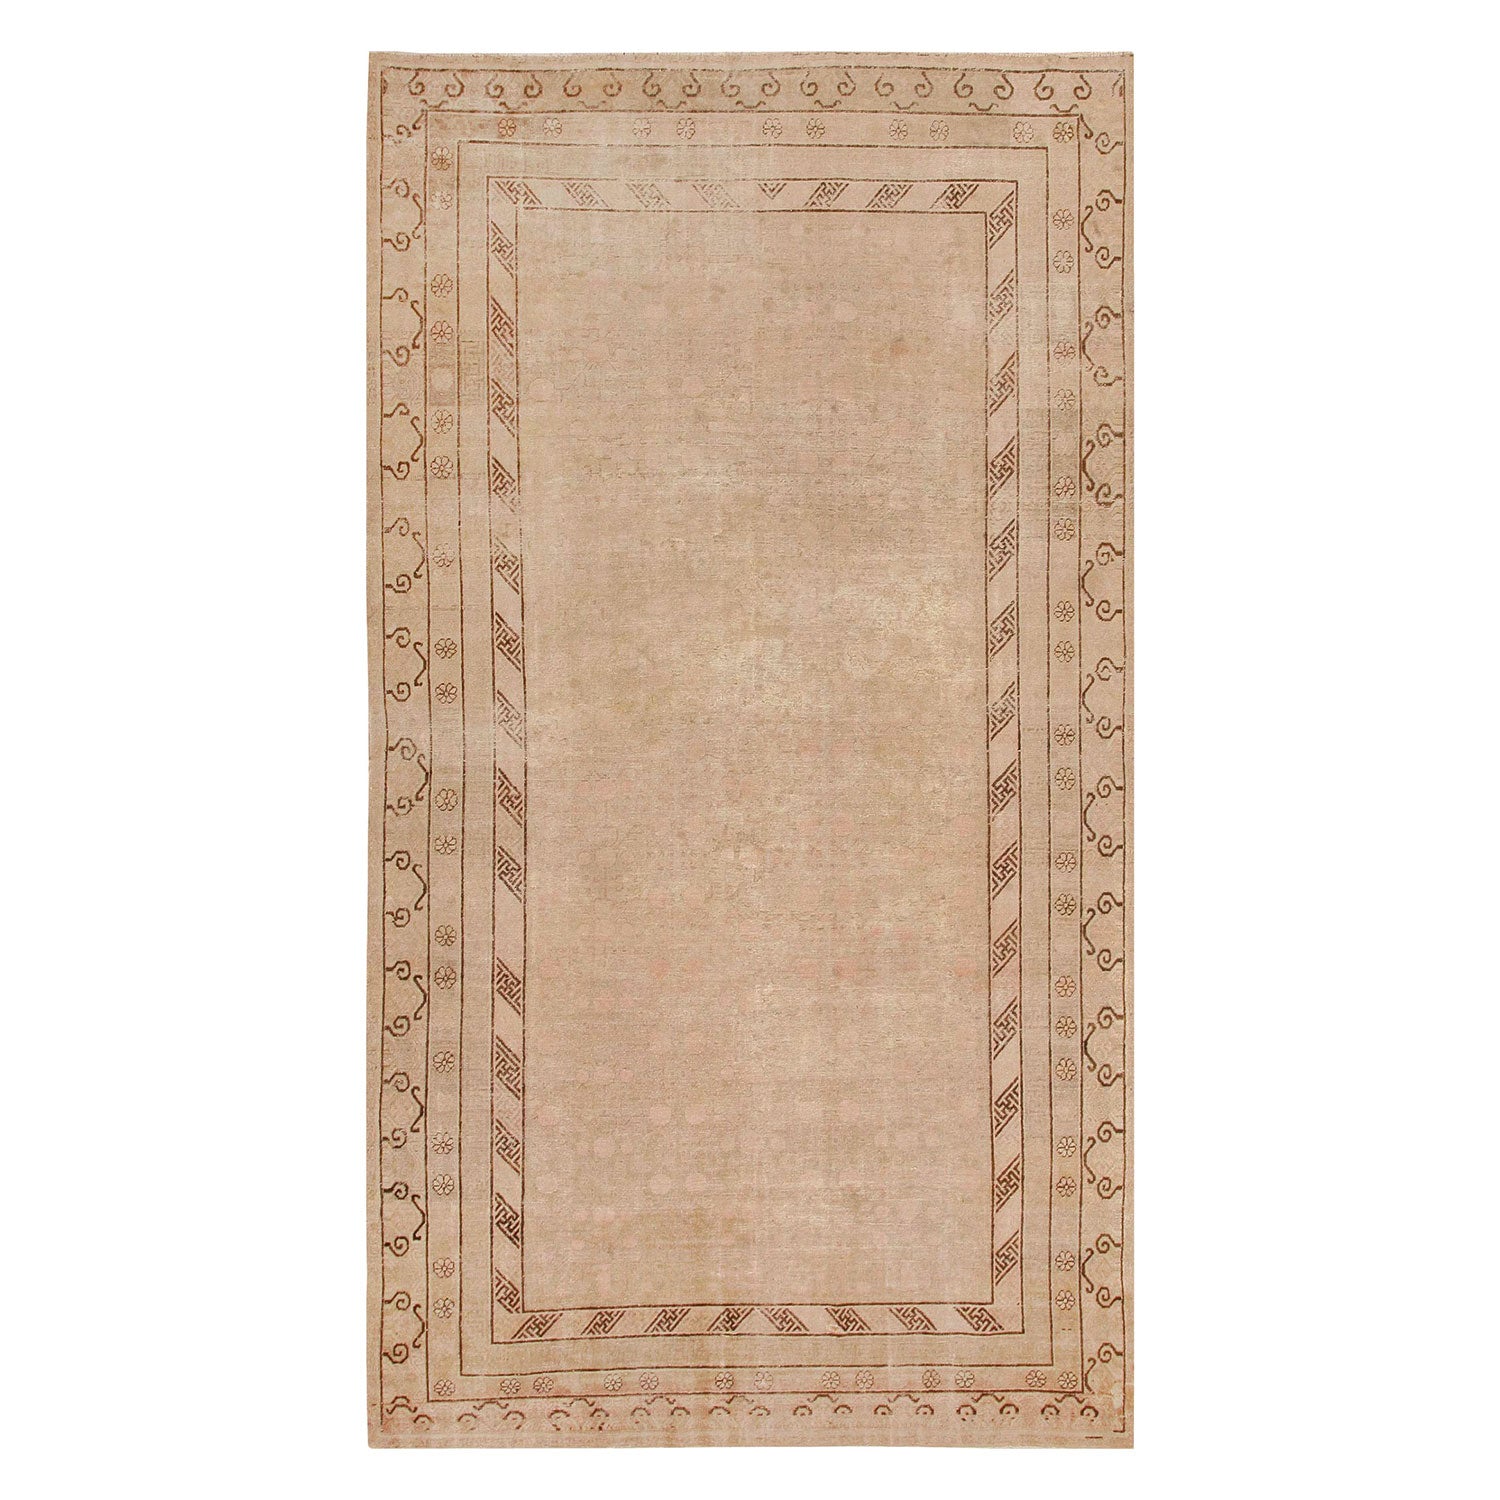 Elegant rectangular area rug with subtle textured pattern and decorative borders